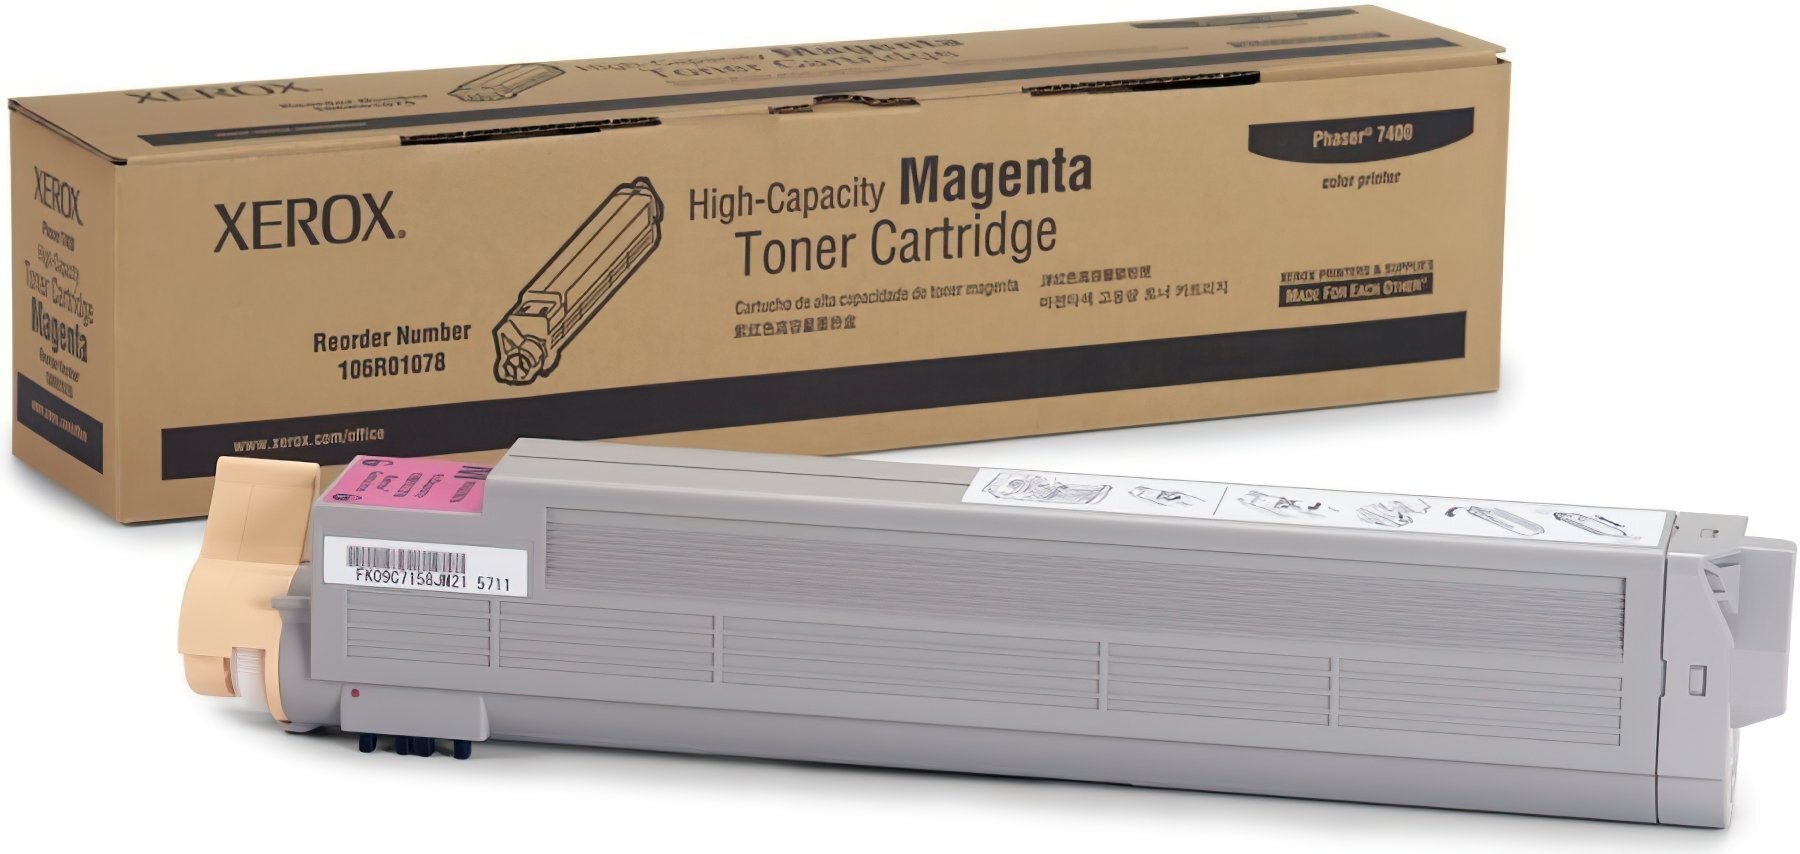 Тонер-картридж лазерный Xerox PH7400 Magenta,Max (106R01078) фото 1